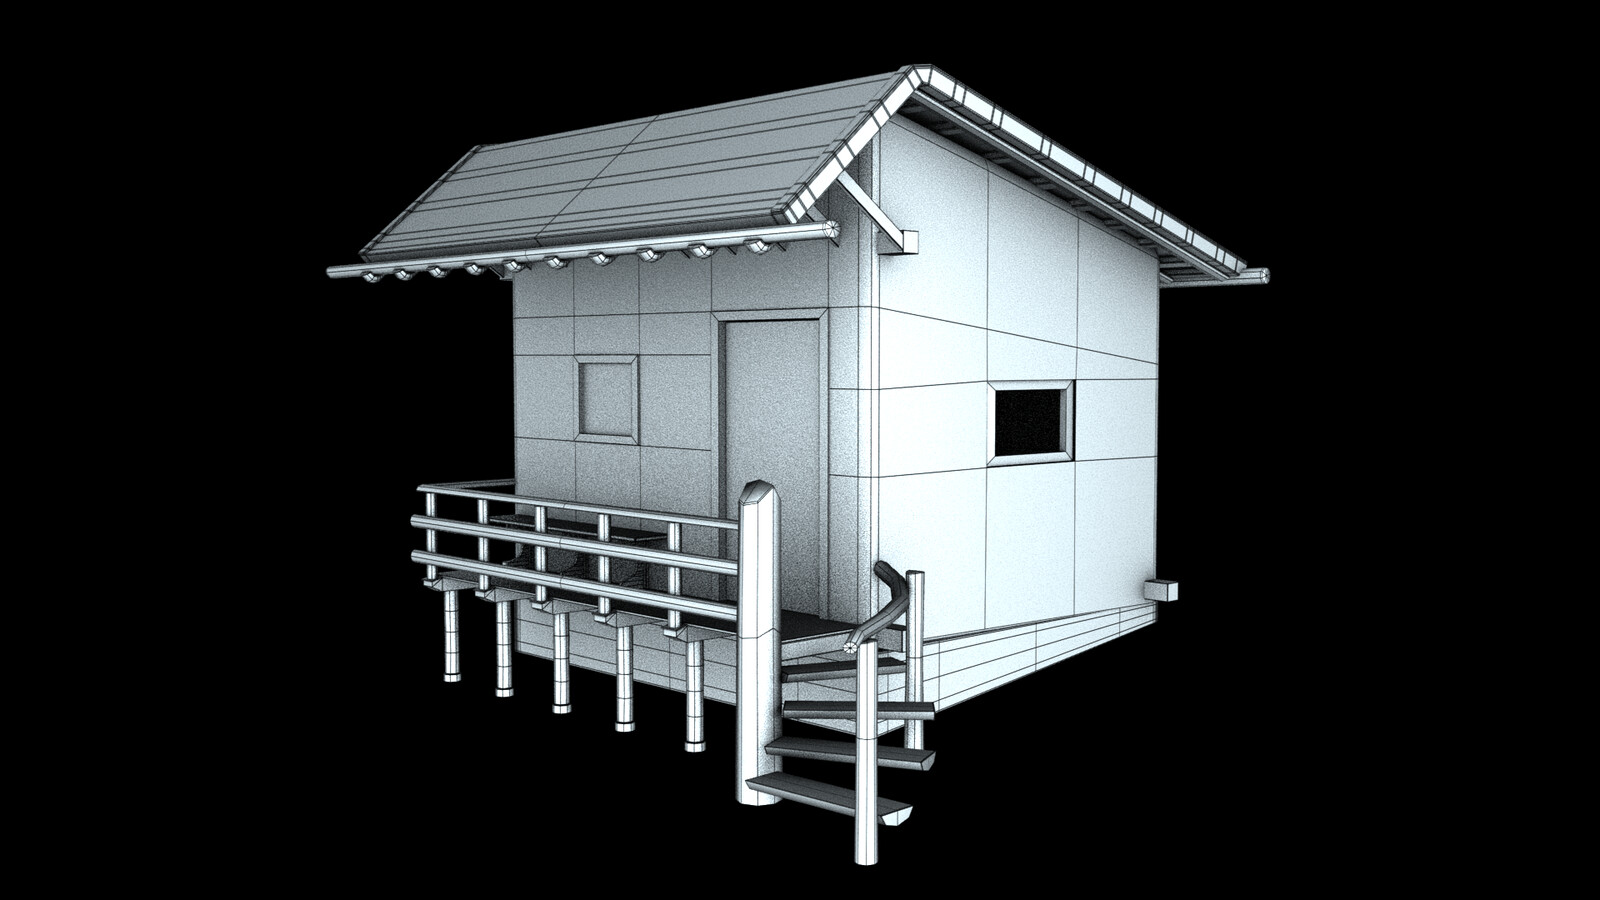 Wireframe of hut model